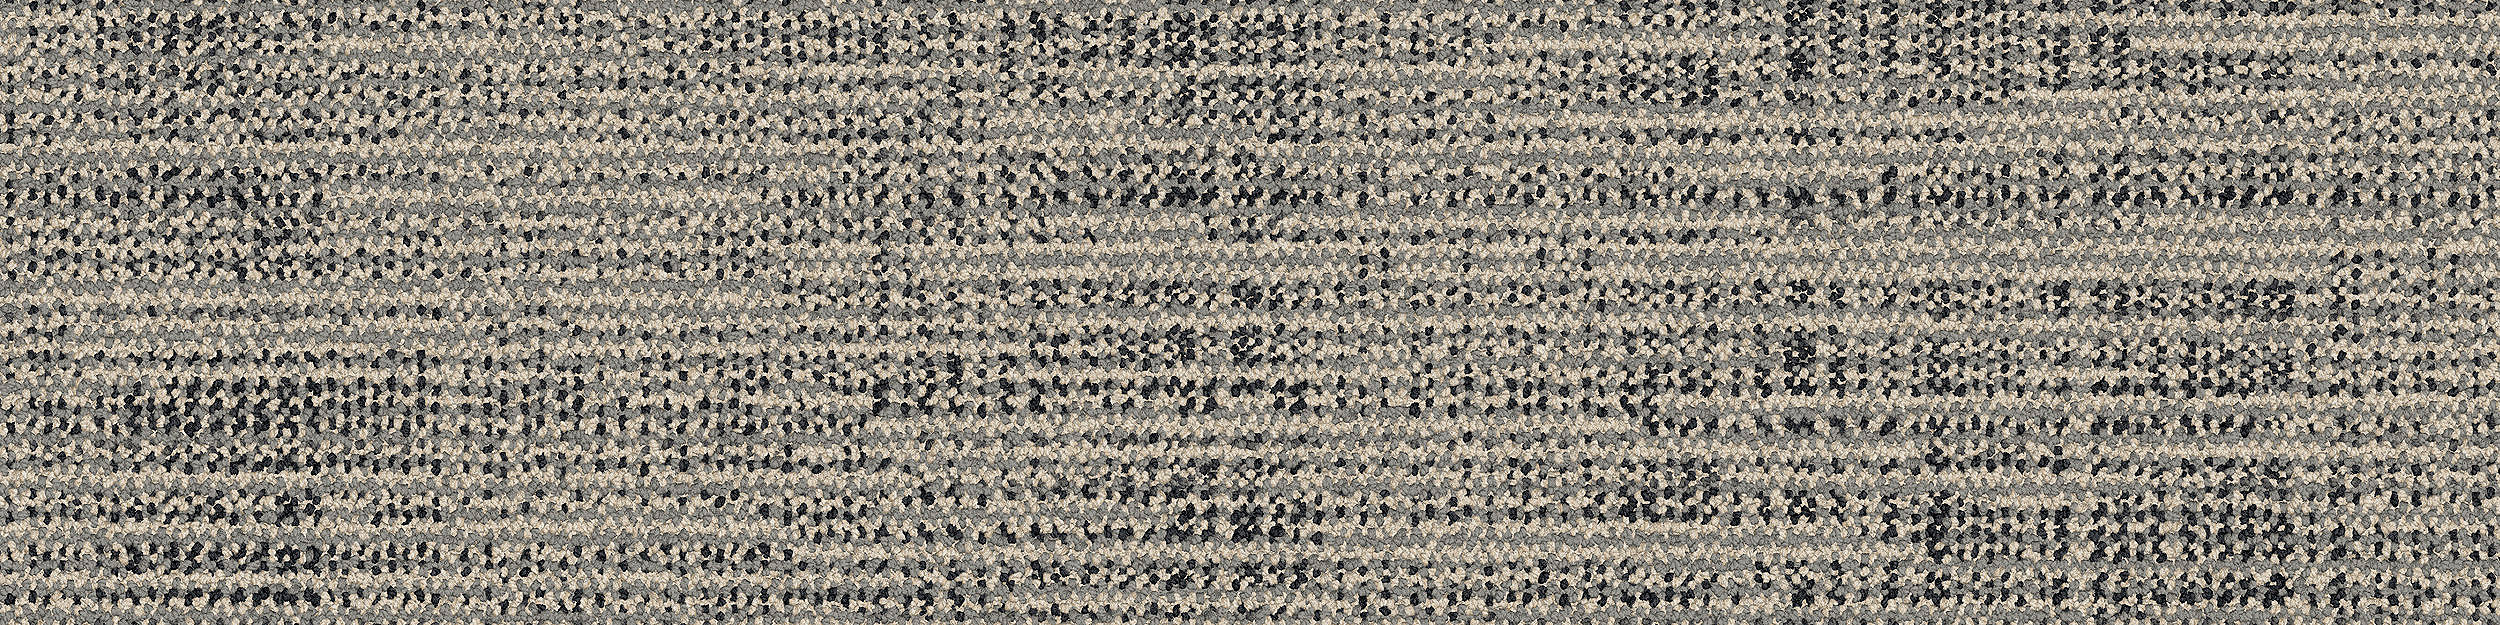 Screen Print Carpet Tile in Linen image number 6